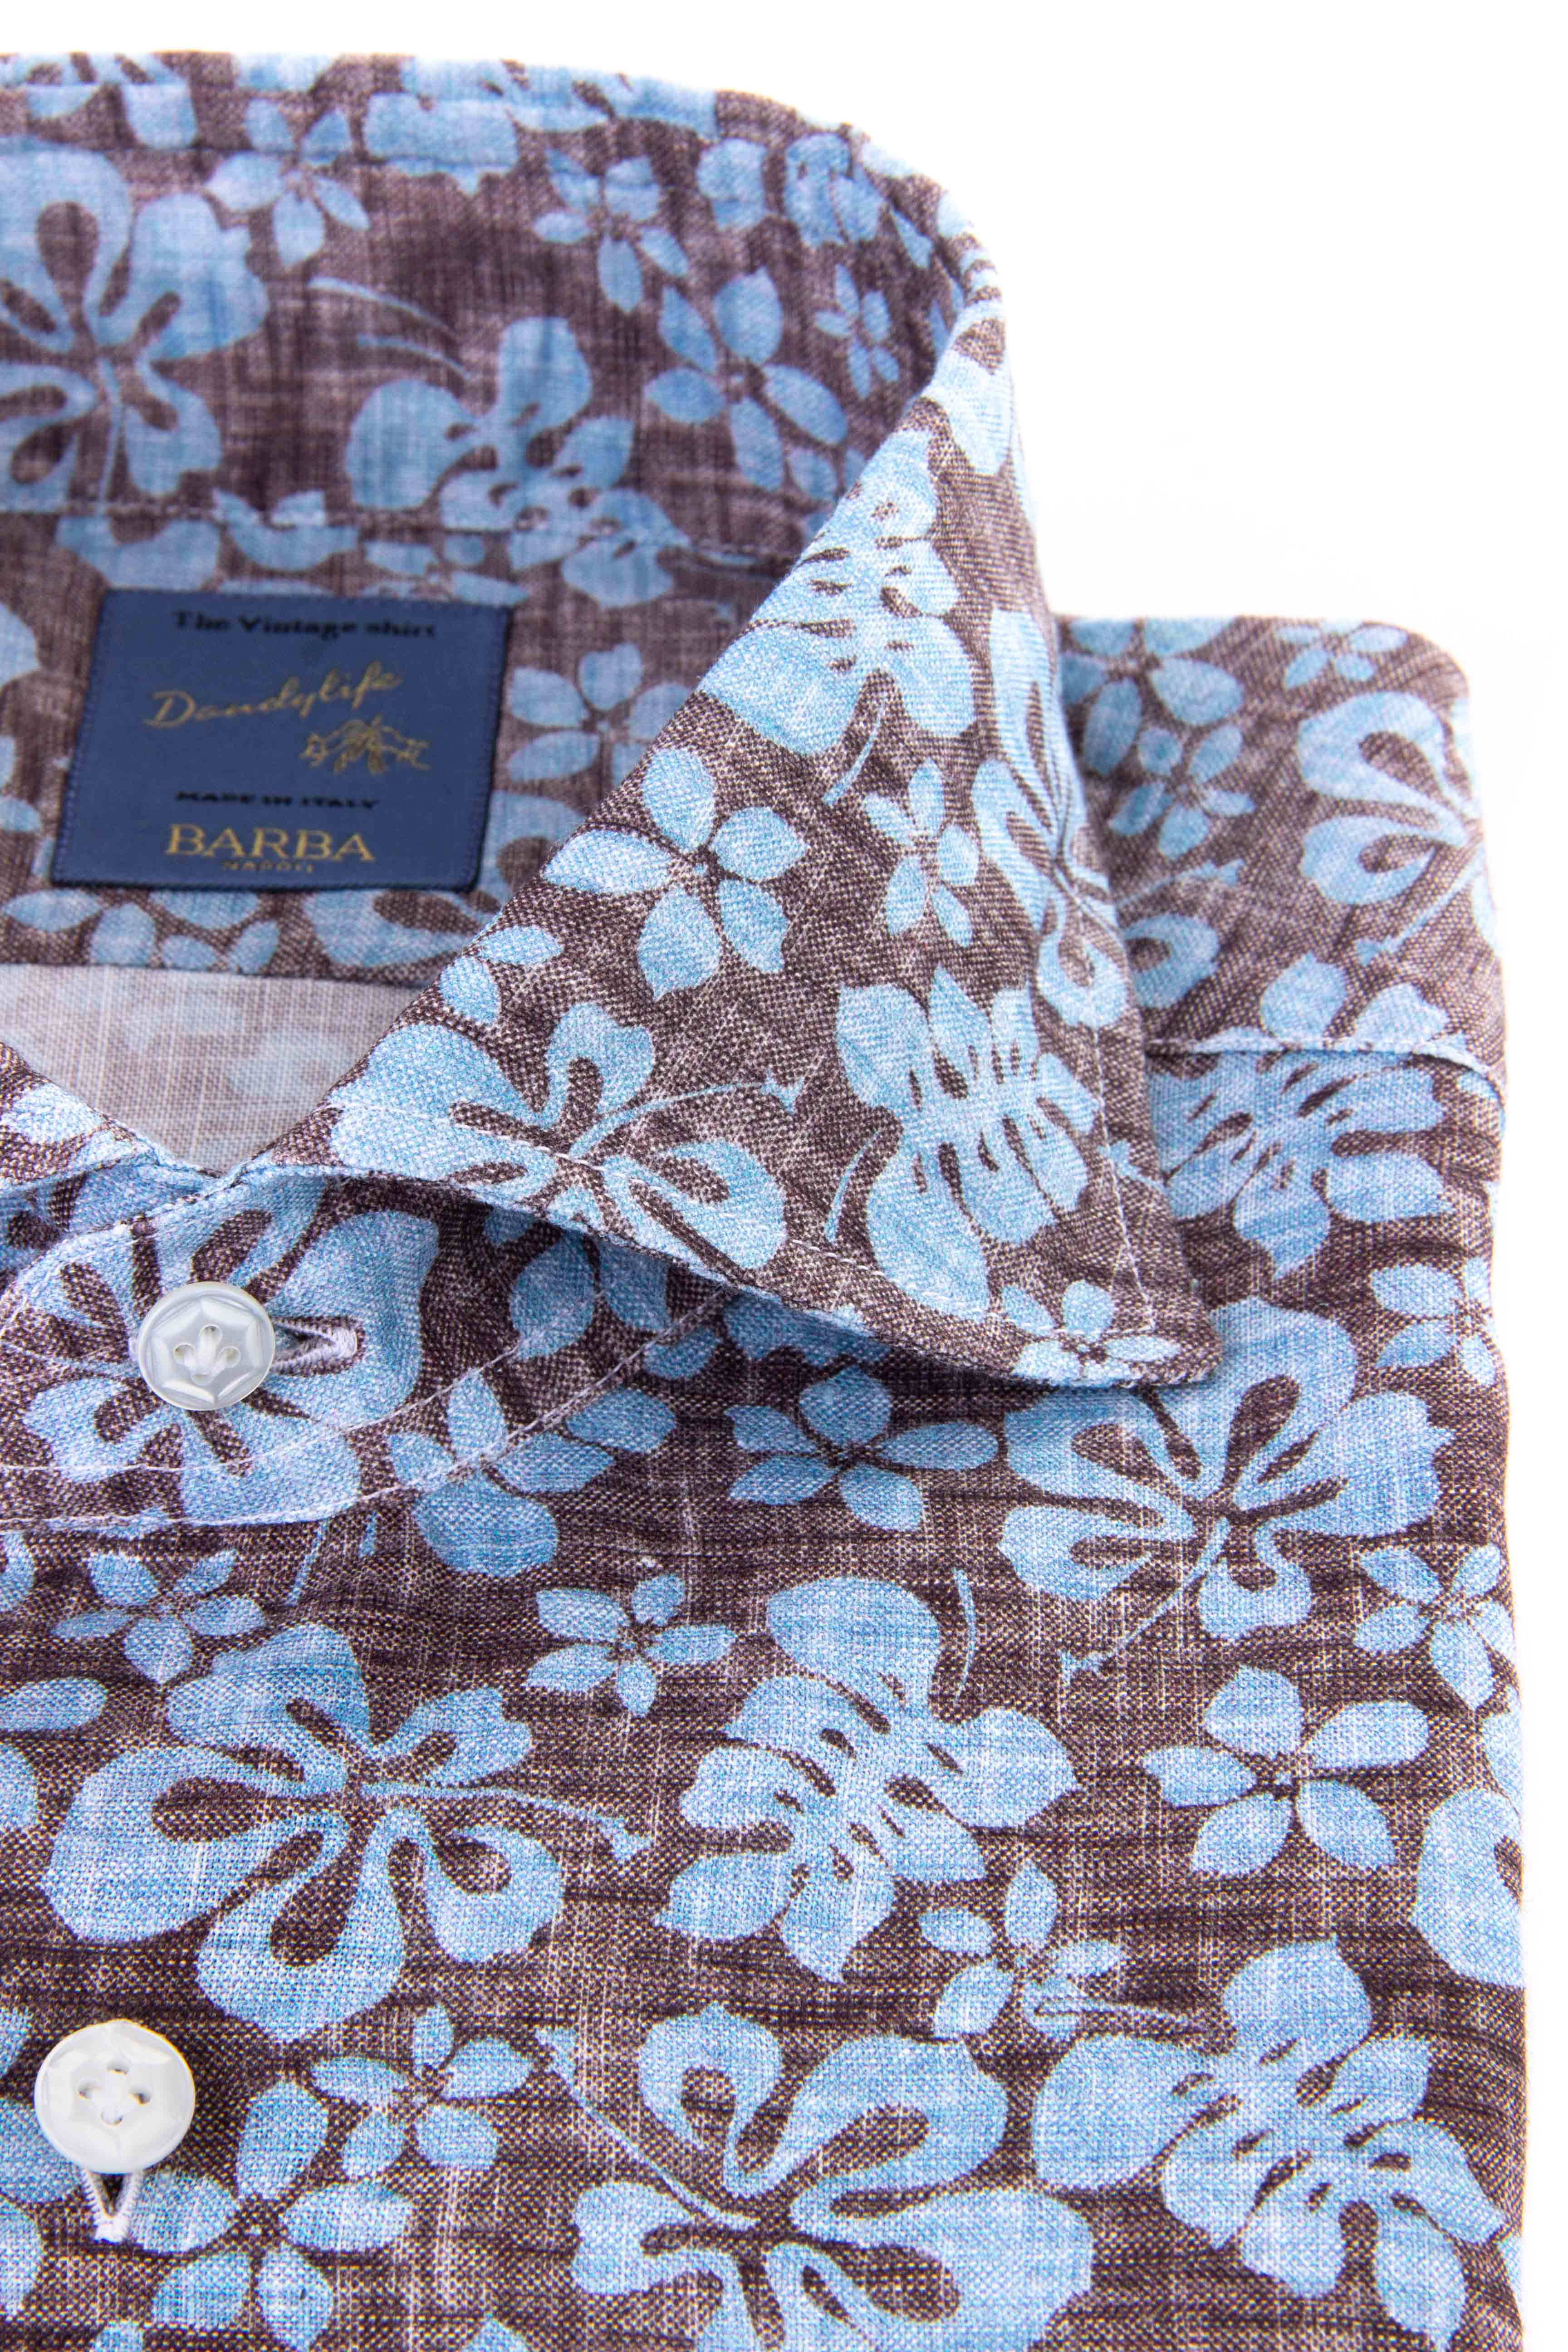 Dandylife linen floral shirt